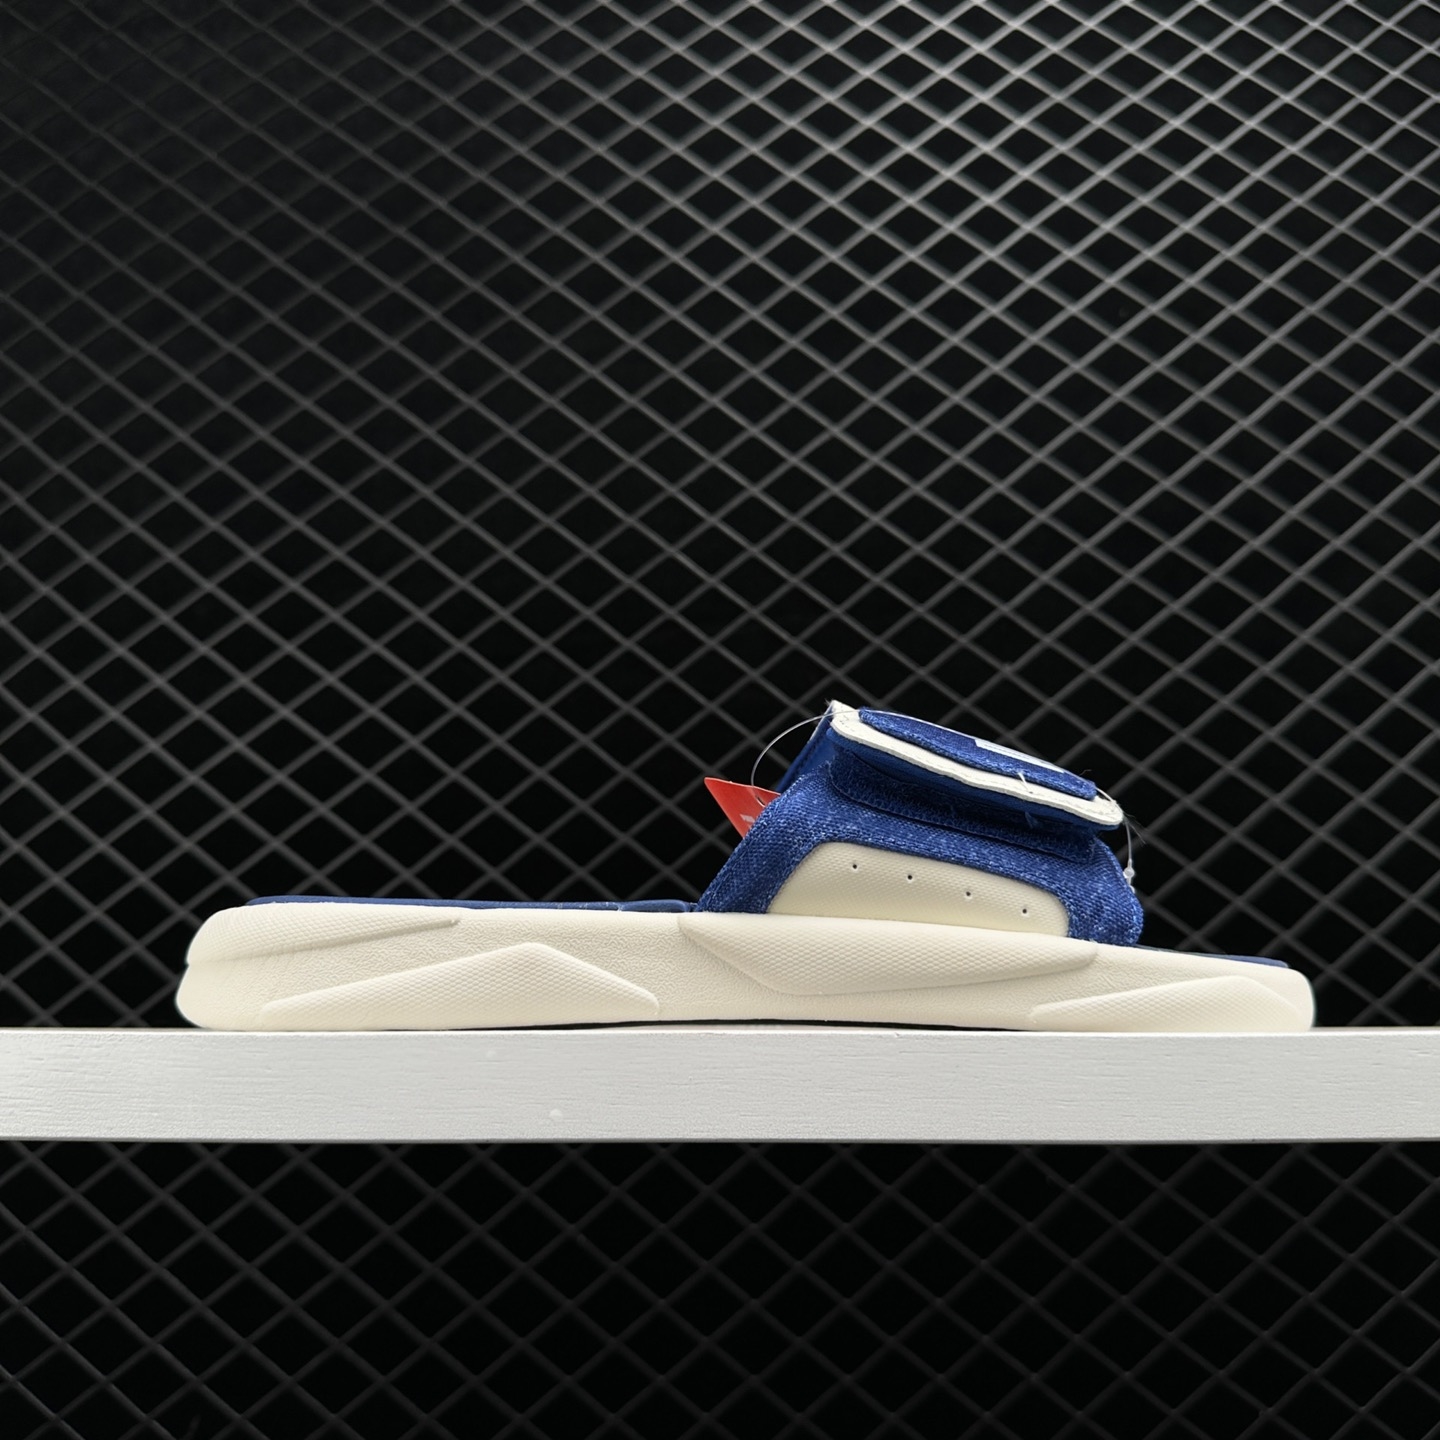 Puma Royalcat Comfort Slides 'Denim' - Stylish and Comfortable Slides | 389154 01